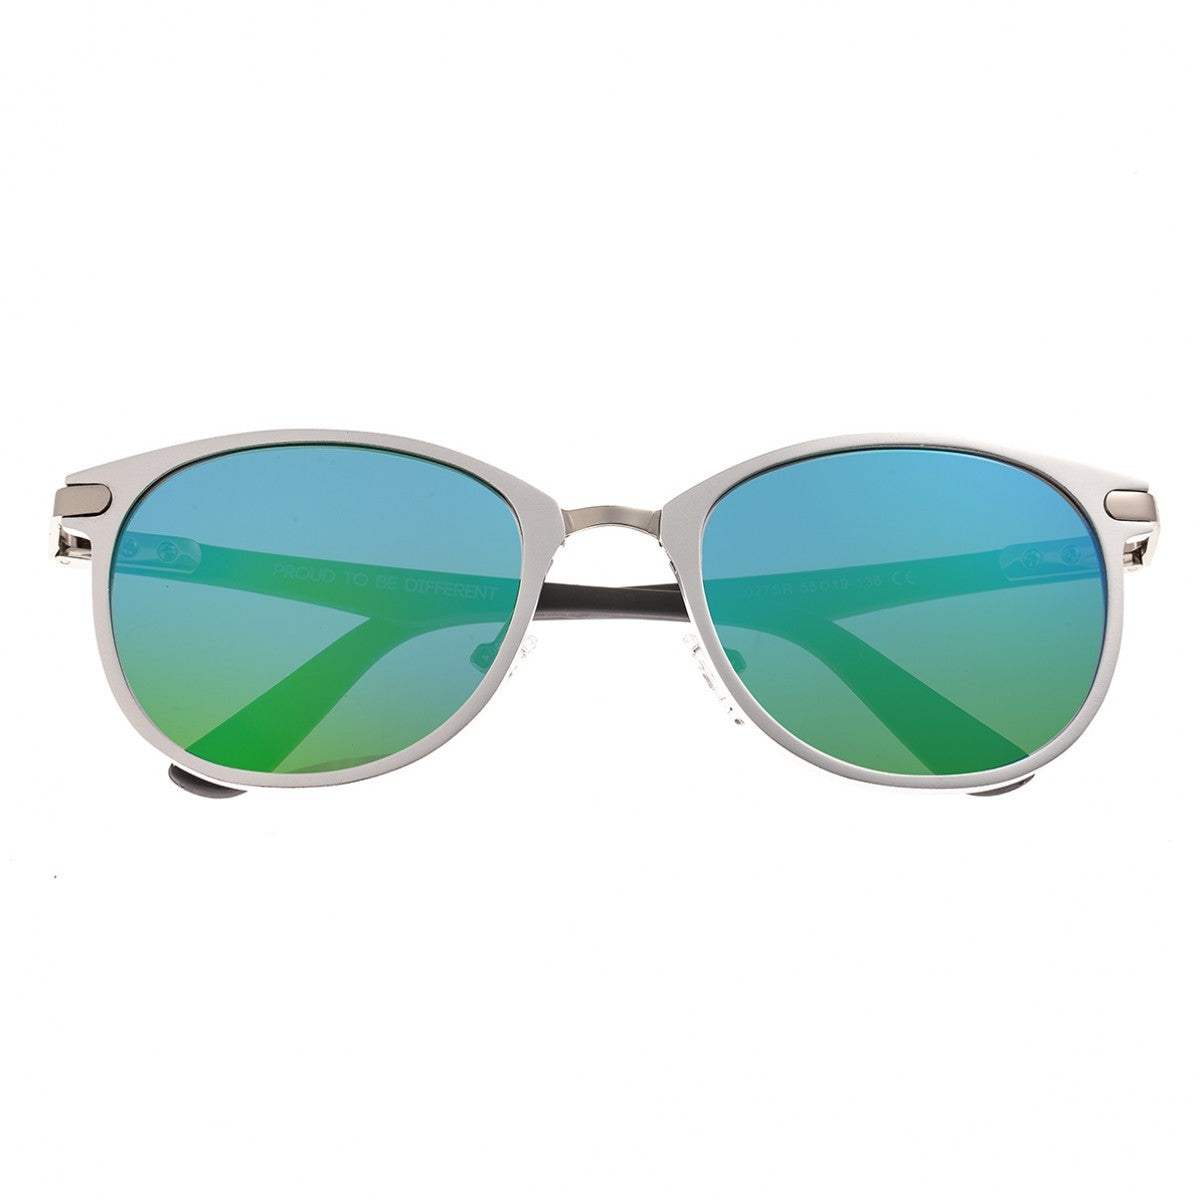 Breed Cetus Aluminium and Carbon Fiber Polarized Sunglasses - Silver/Blue - BSG027SR